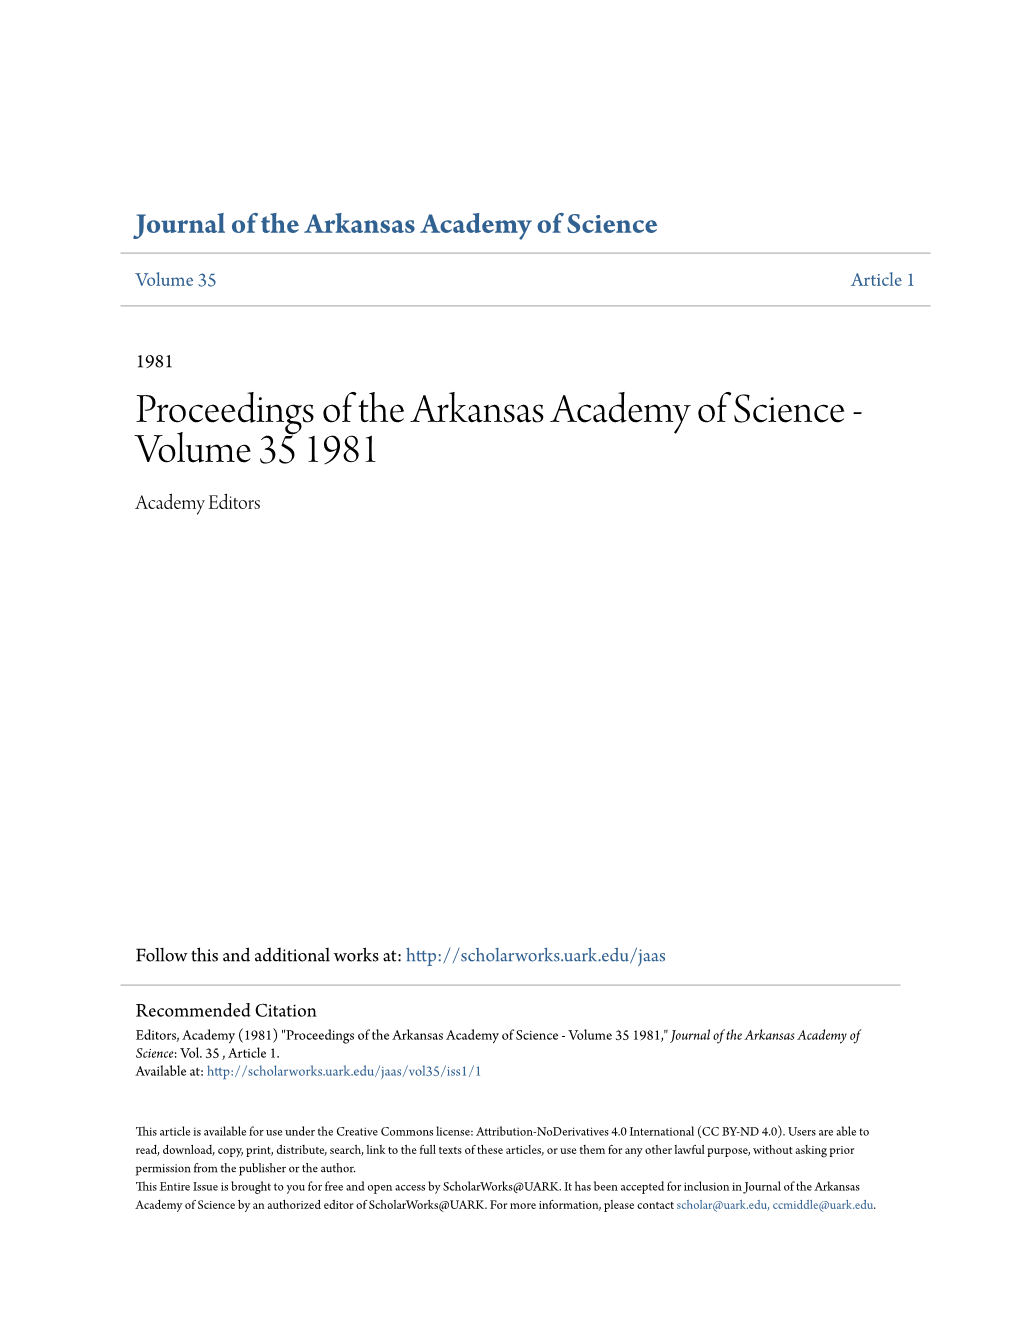 Proceedings of the Arkansas Academy of Science - Volume 35 1981 Academy Editors